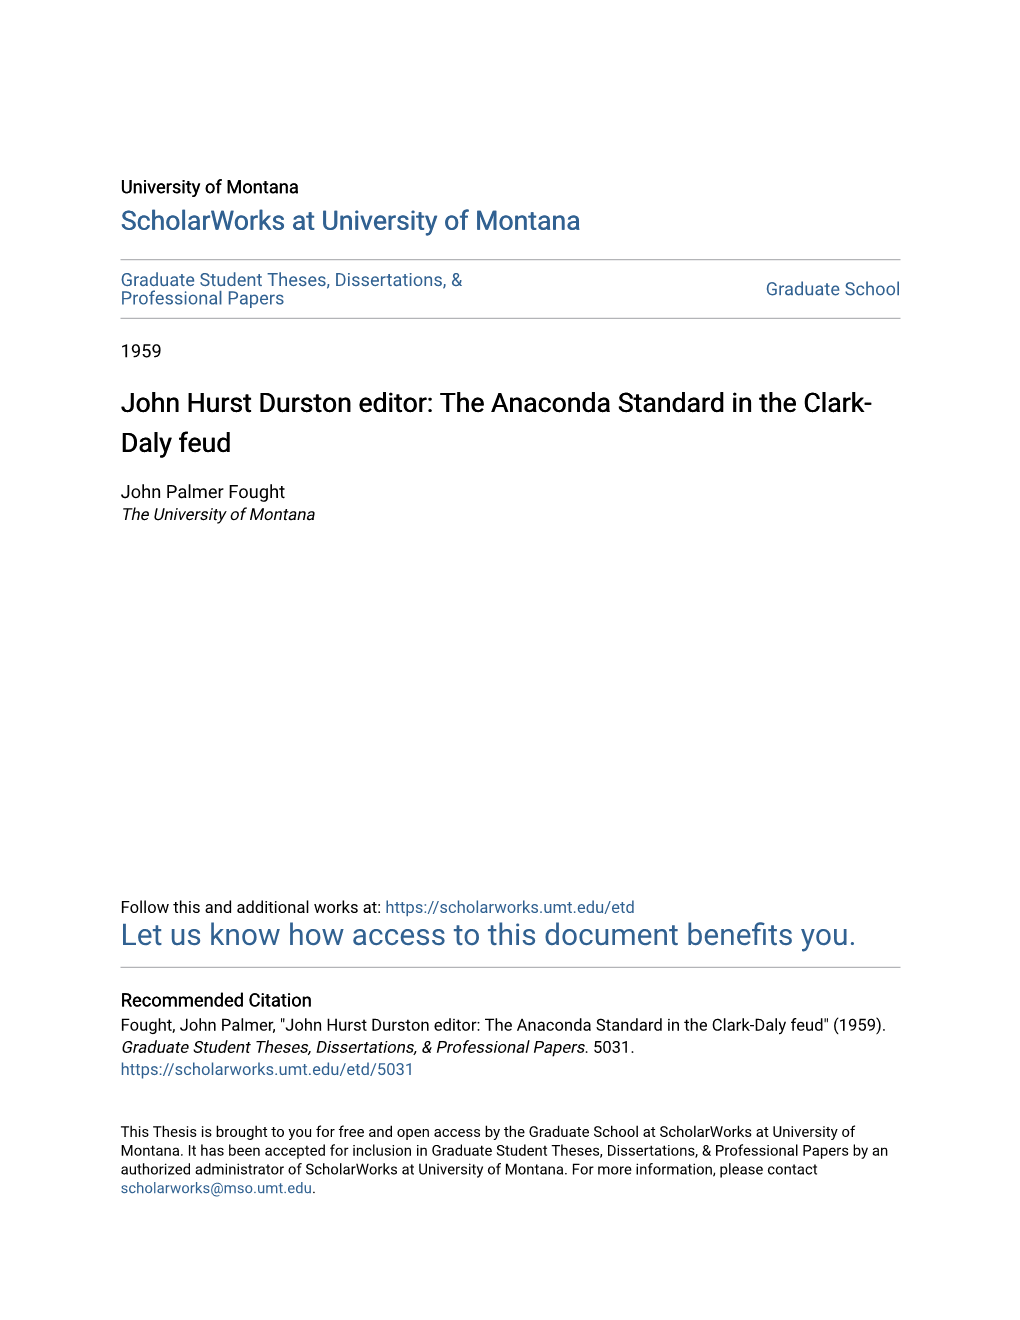 John Hurst Durston Editor: the Anaconda Standard in the Clark- Daly Feud